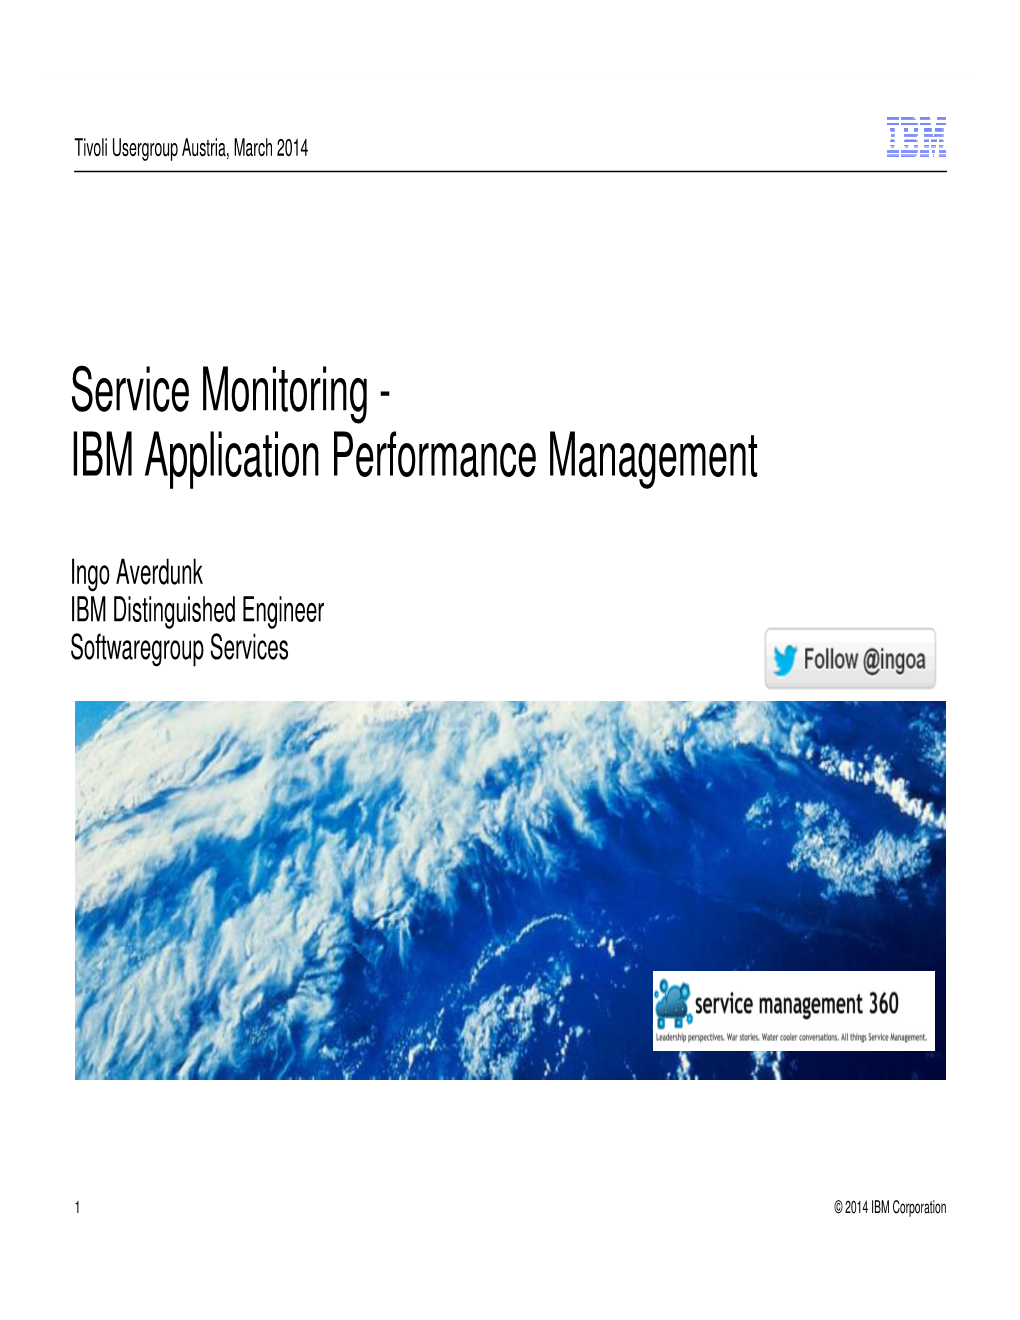 IBM Application Performance Management